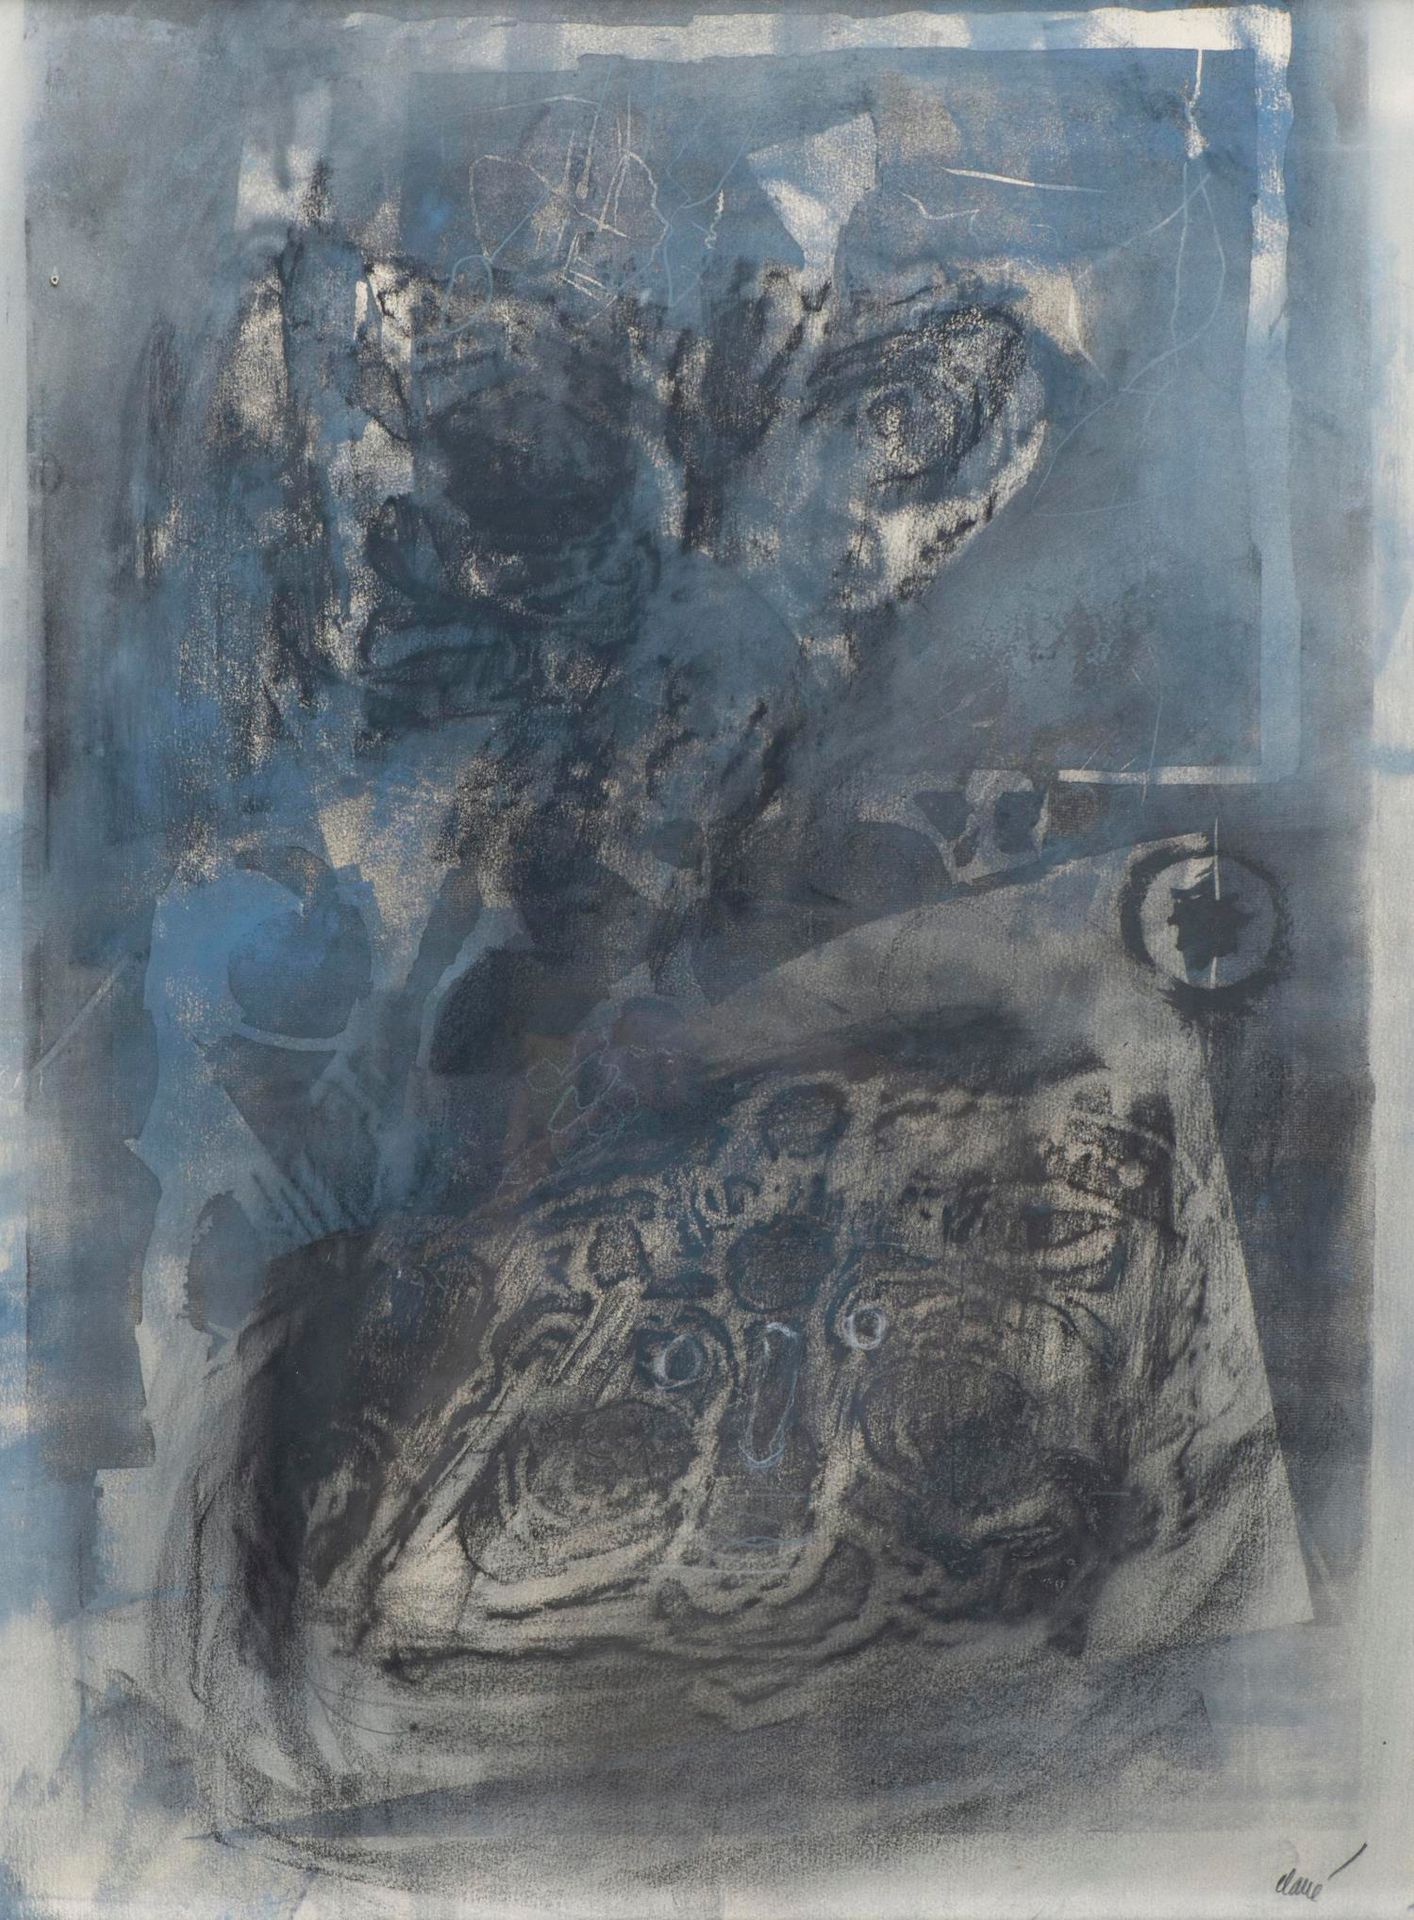 Null 安东尼-克拉夫（1913-2005），"人物 "混合技术，用木炭和白粉笔加强的钢网，右下角有签名

74 x 54 cm